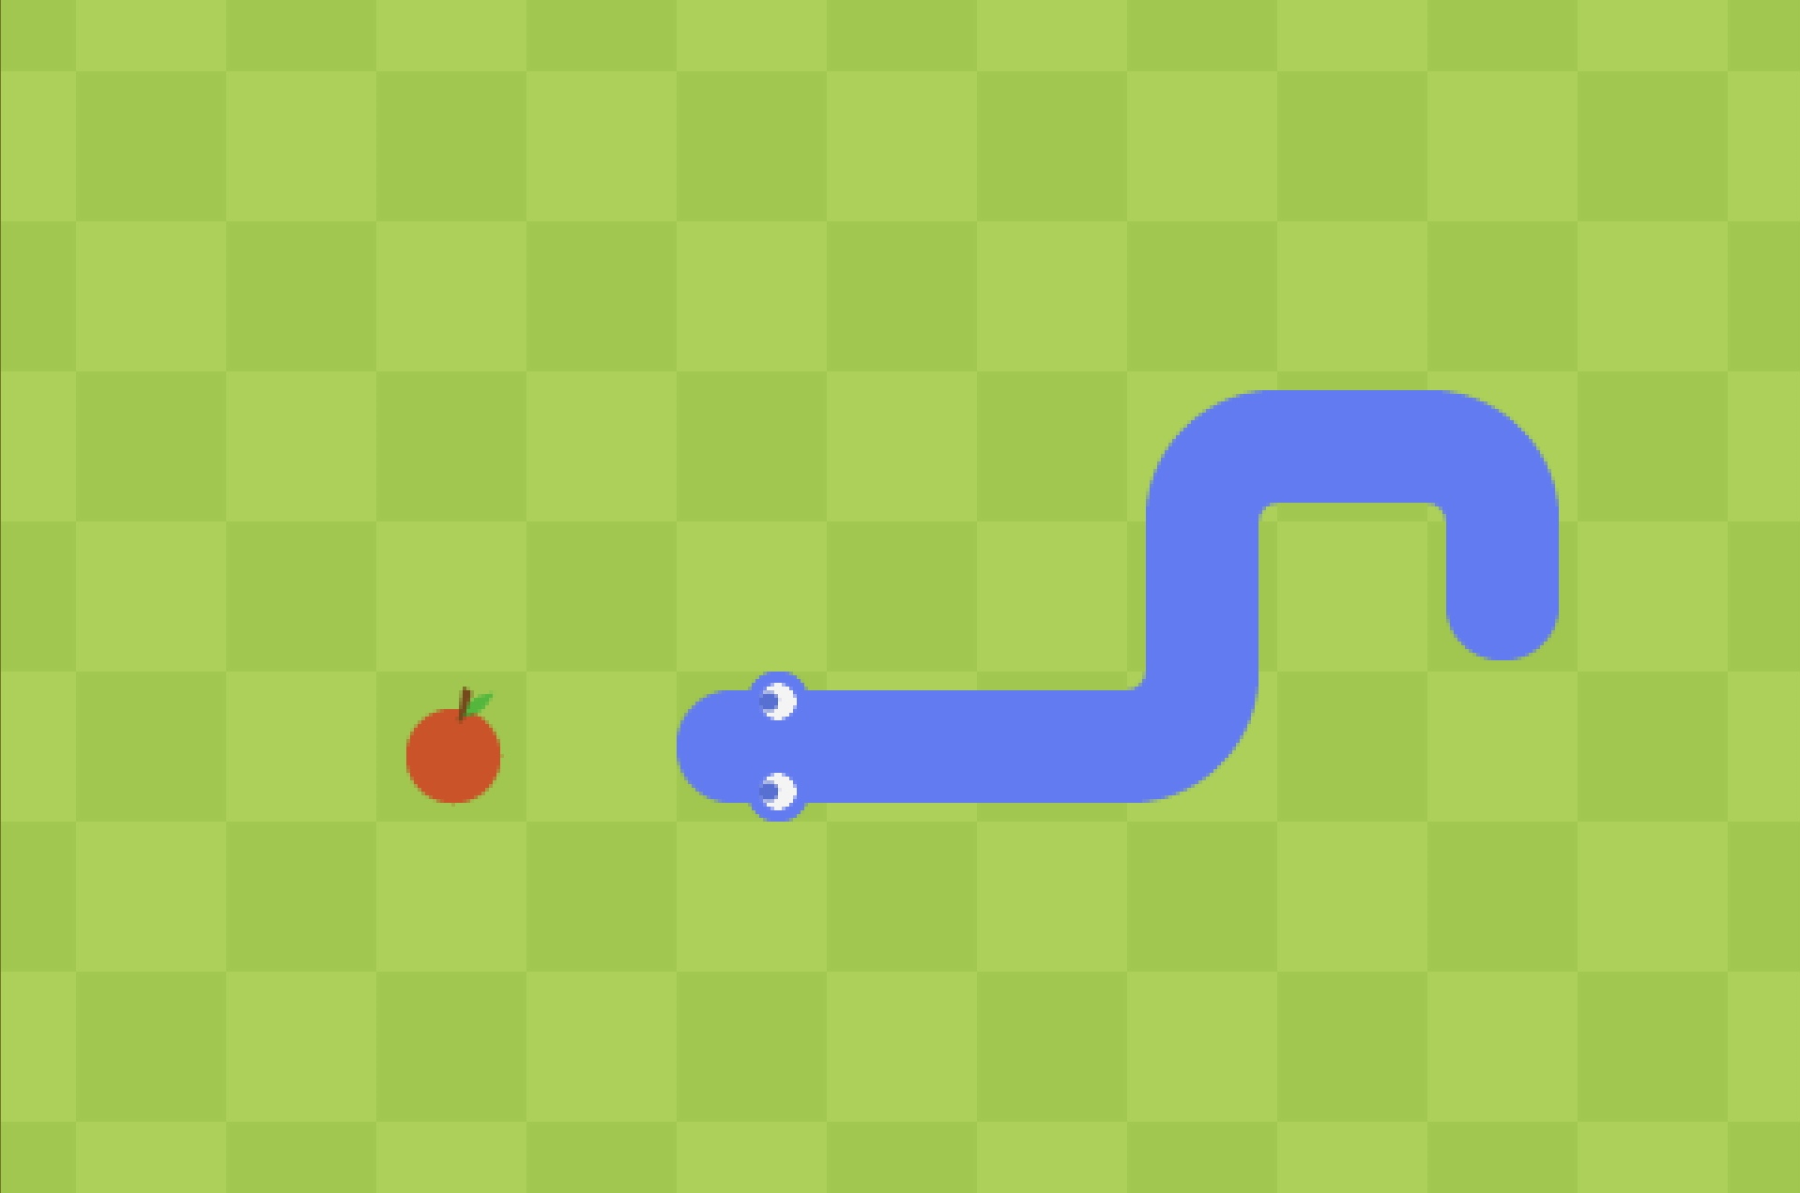 classic snake game add 1 block